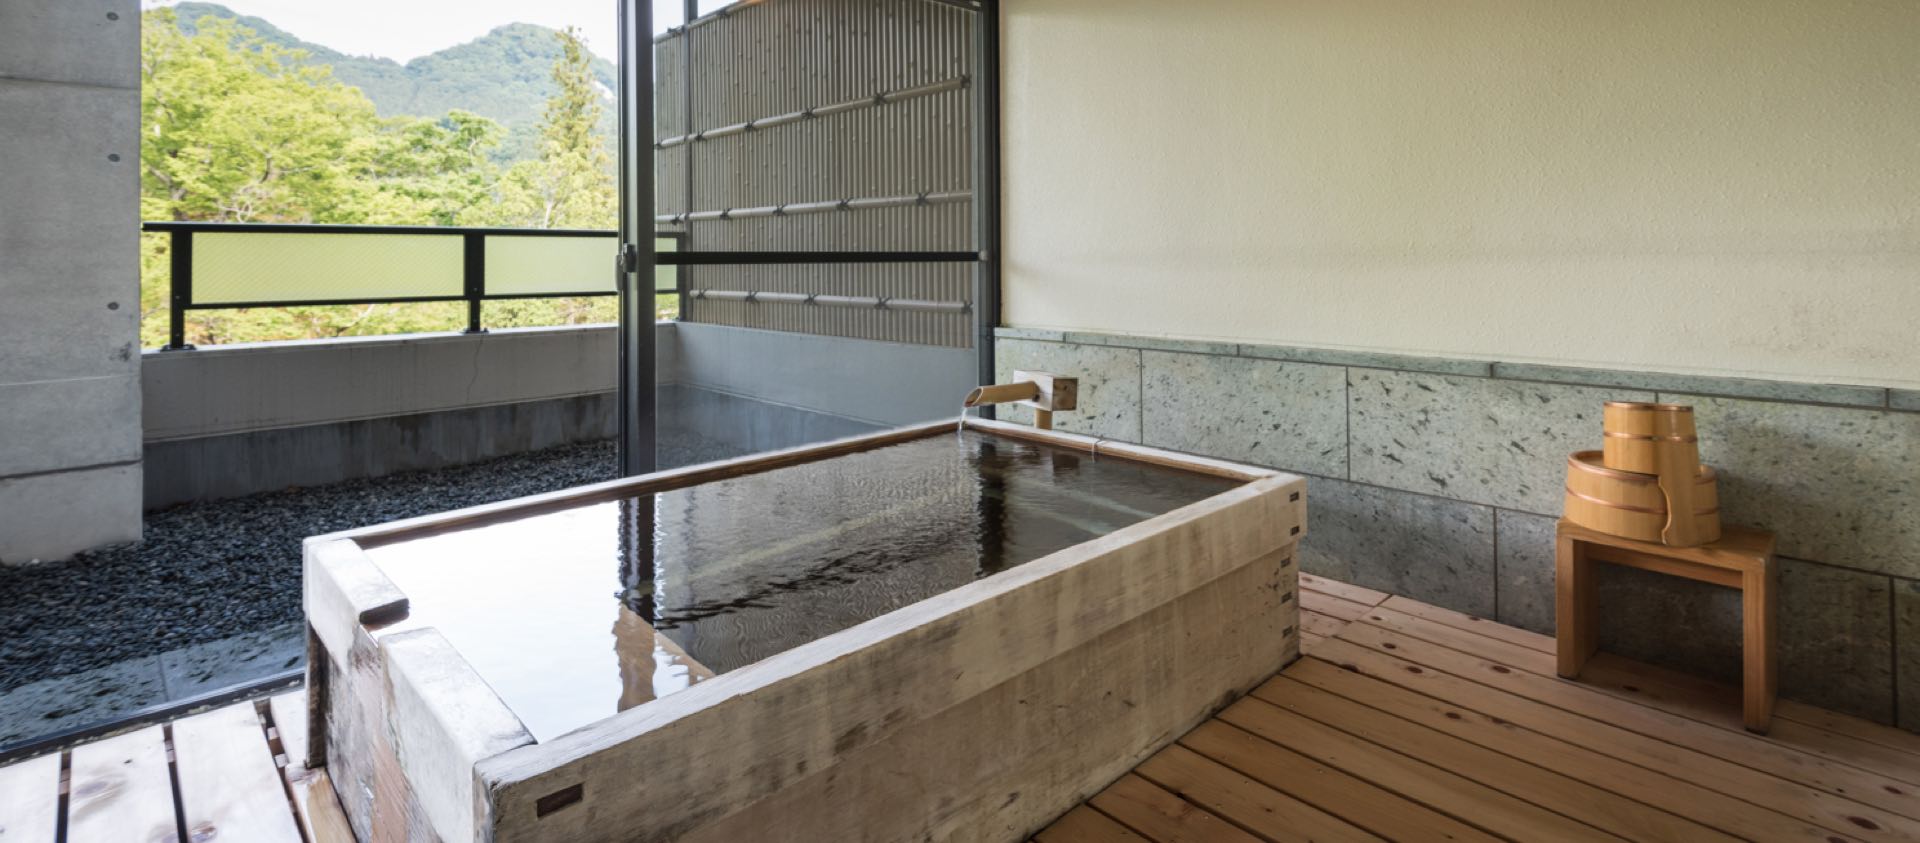 露天風温泉の檜風呂